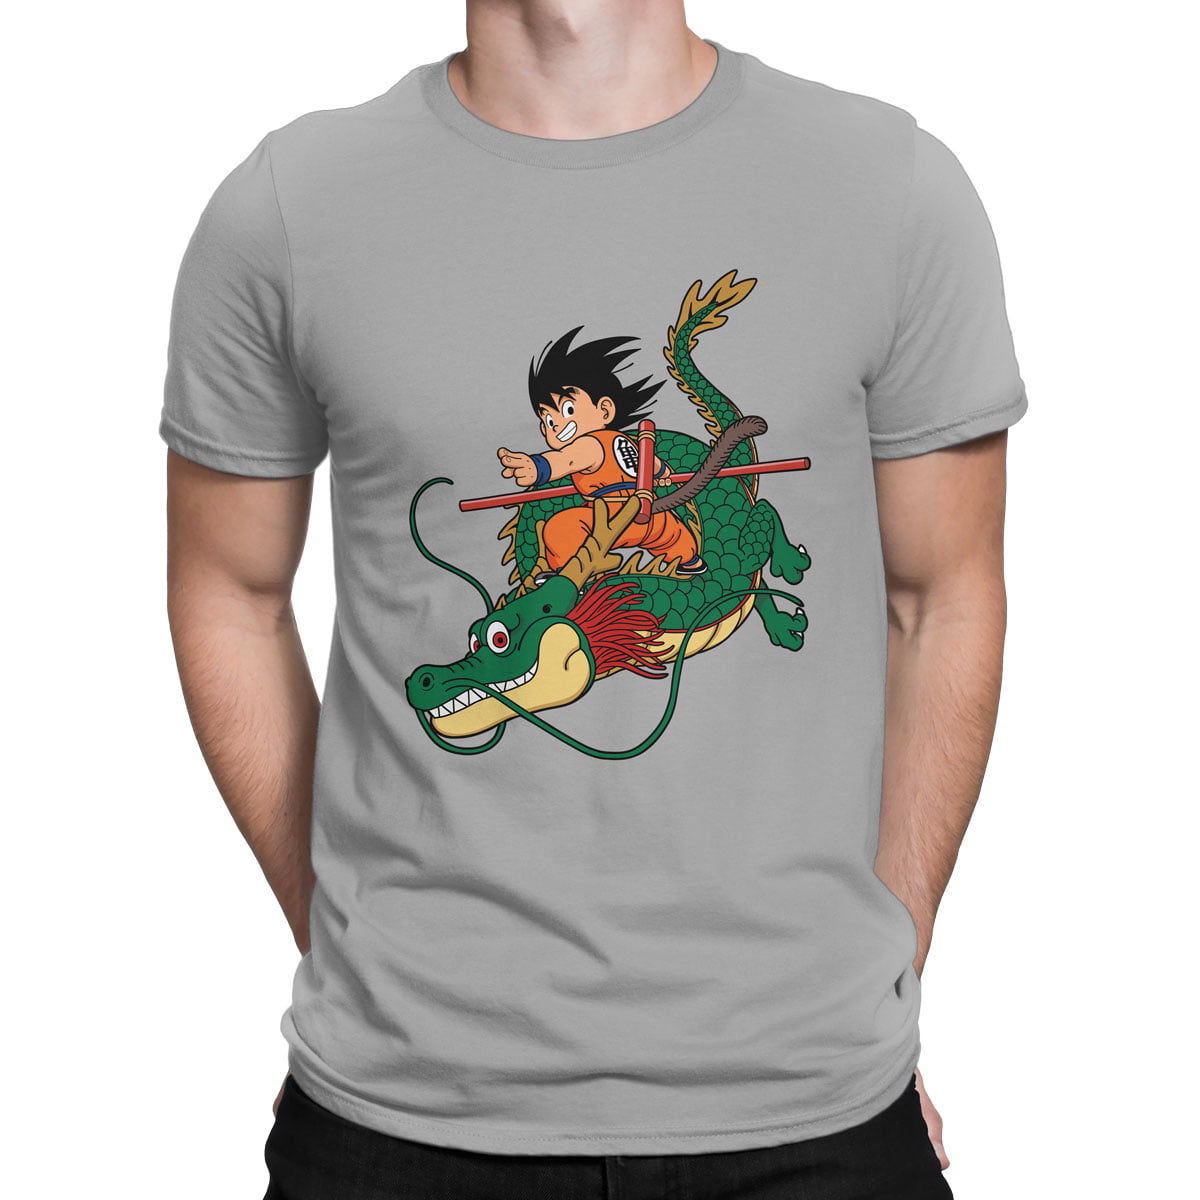 Dragonball 3 shirt g erkek - dragon ball goku no5 baskılı erkek t-shirt - figurex